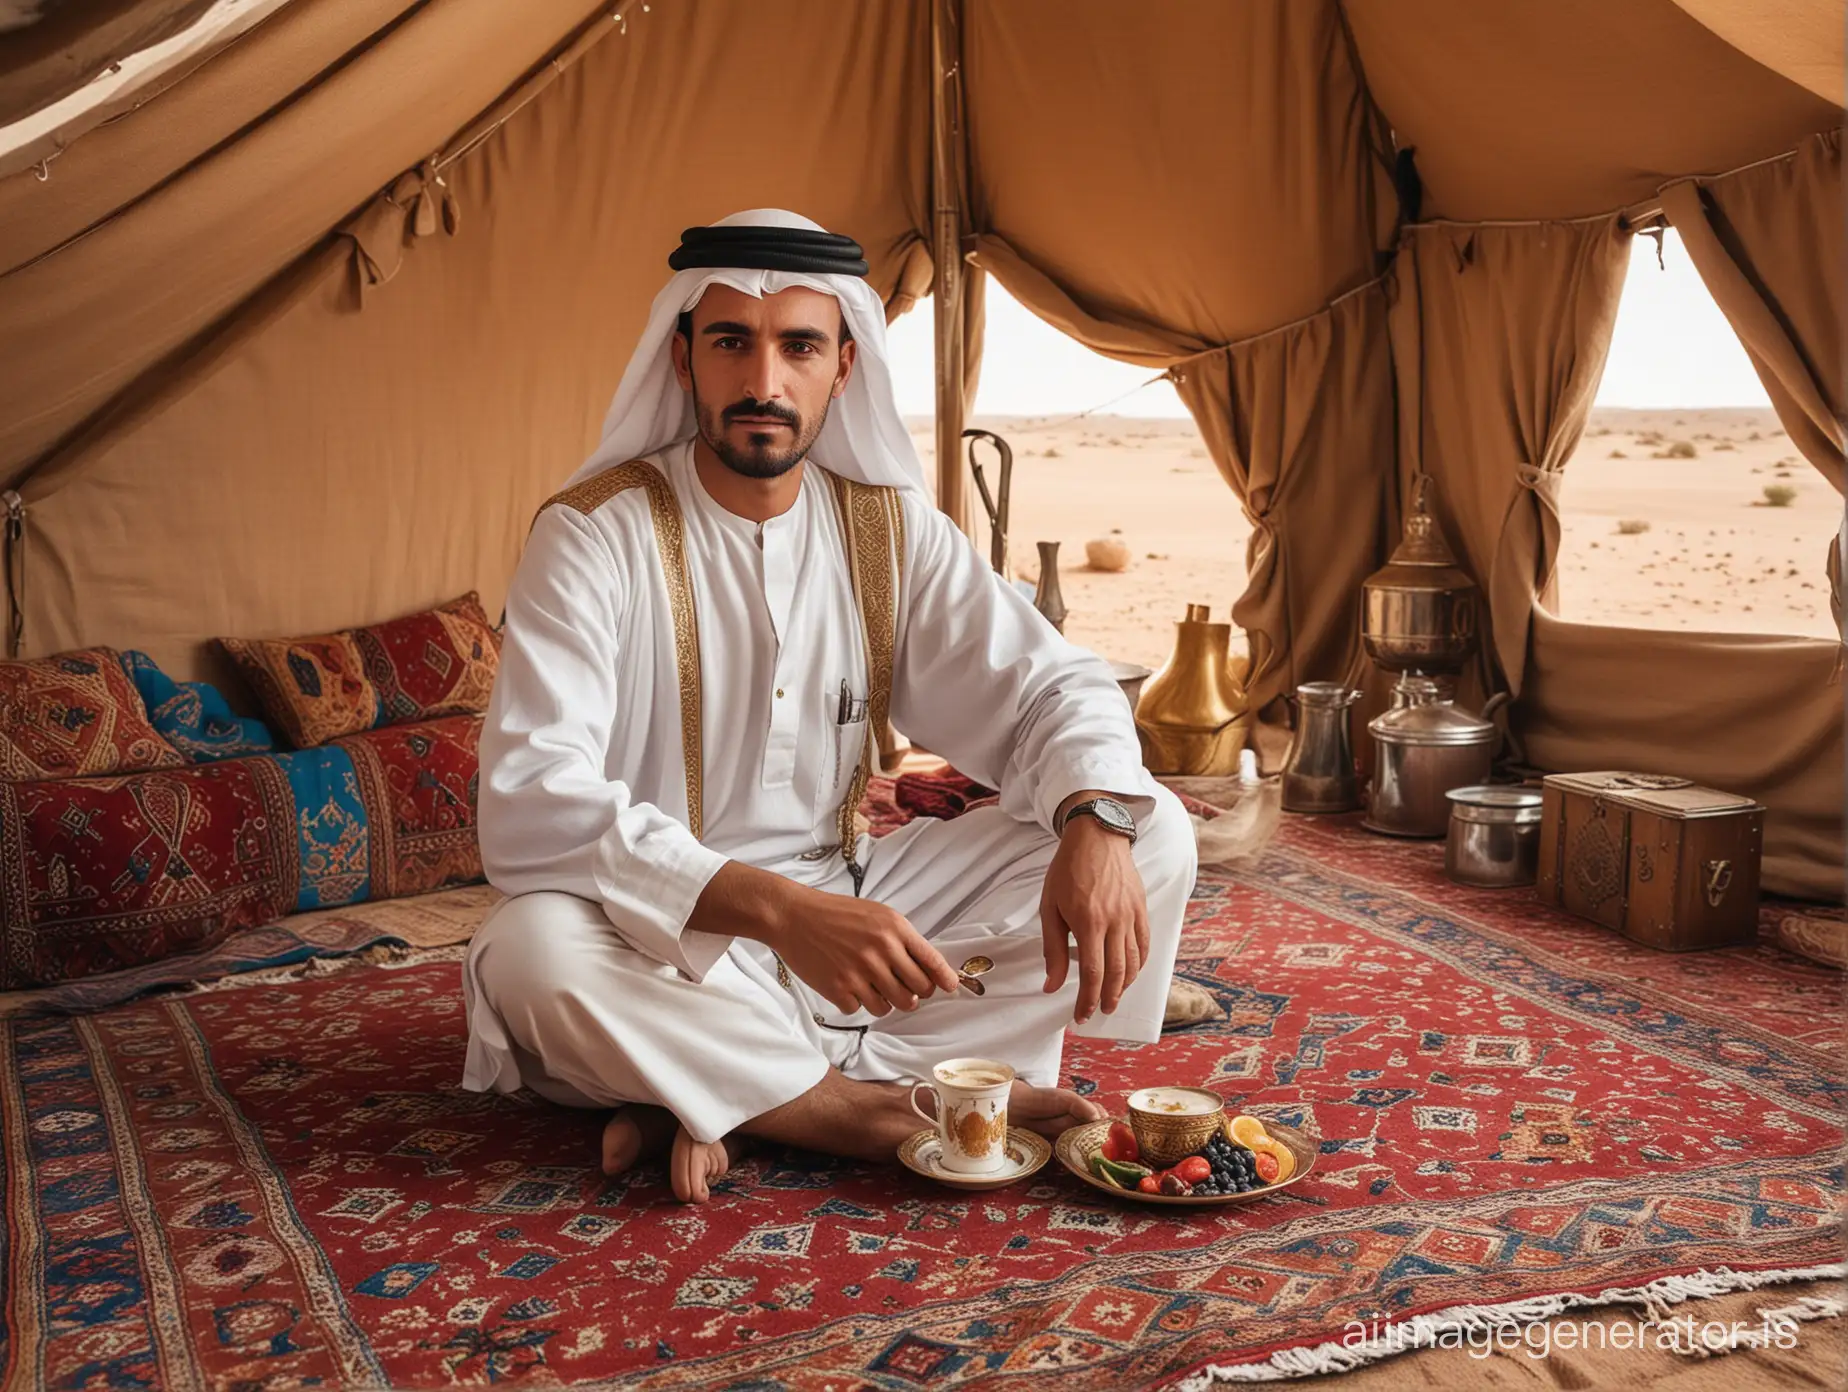 European-Man-in-Arab-Sheikh-Attire-Enjoying-Coffee-in-Luxurious-Desert-Tent